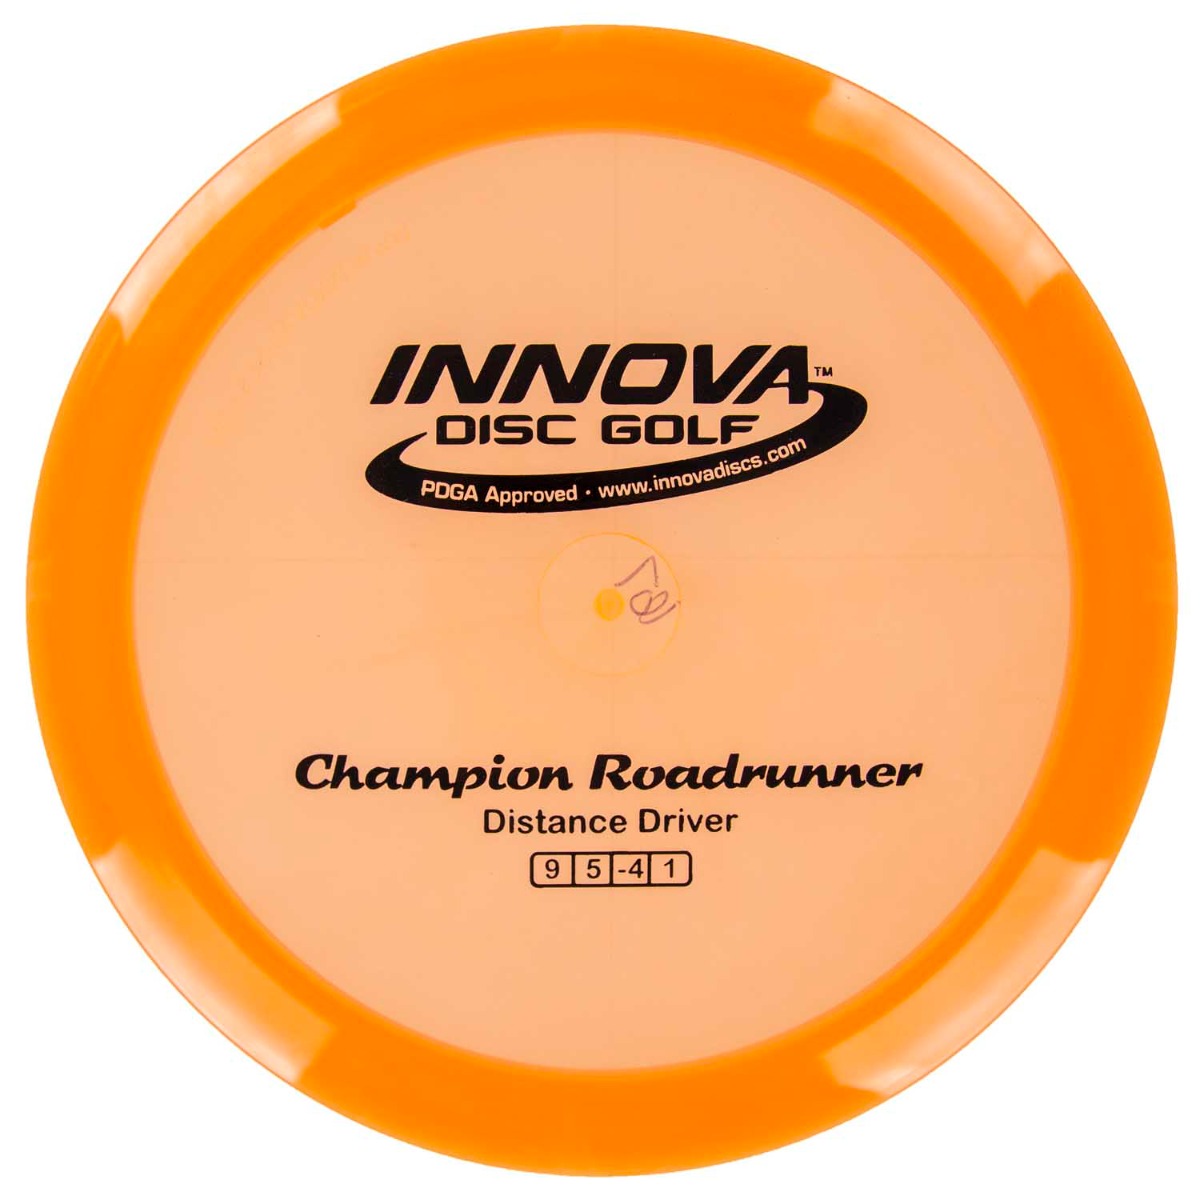 Innova Champion Roadrunner - Understable Distance Driver. Orange color.